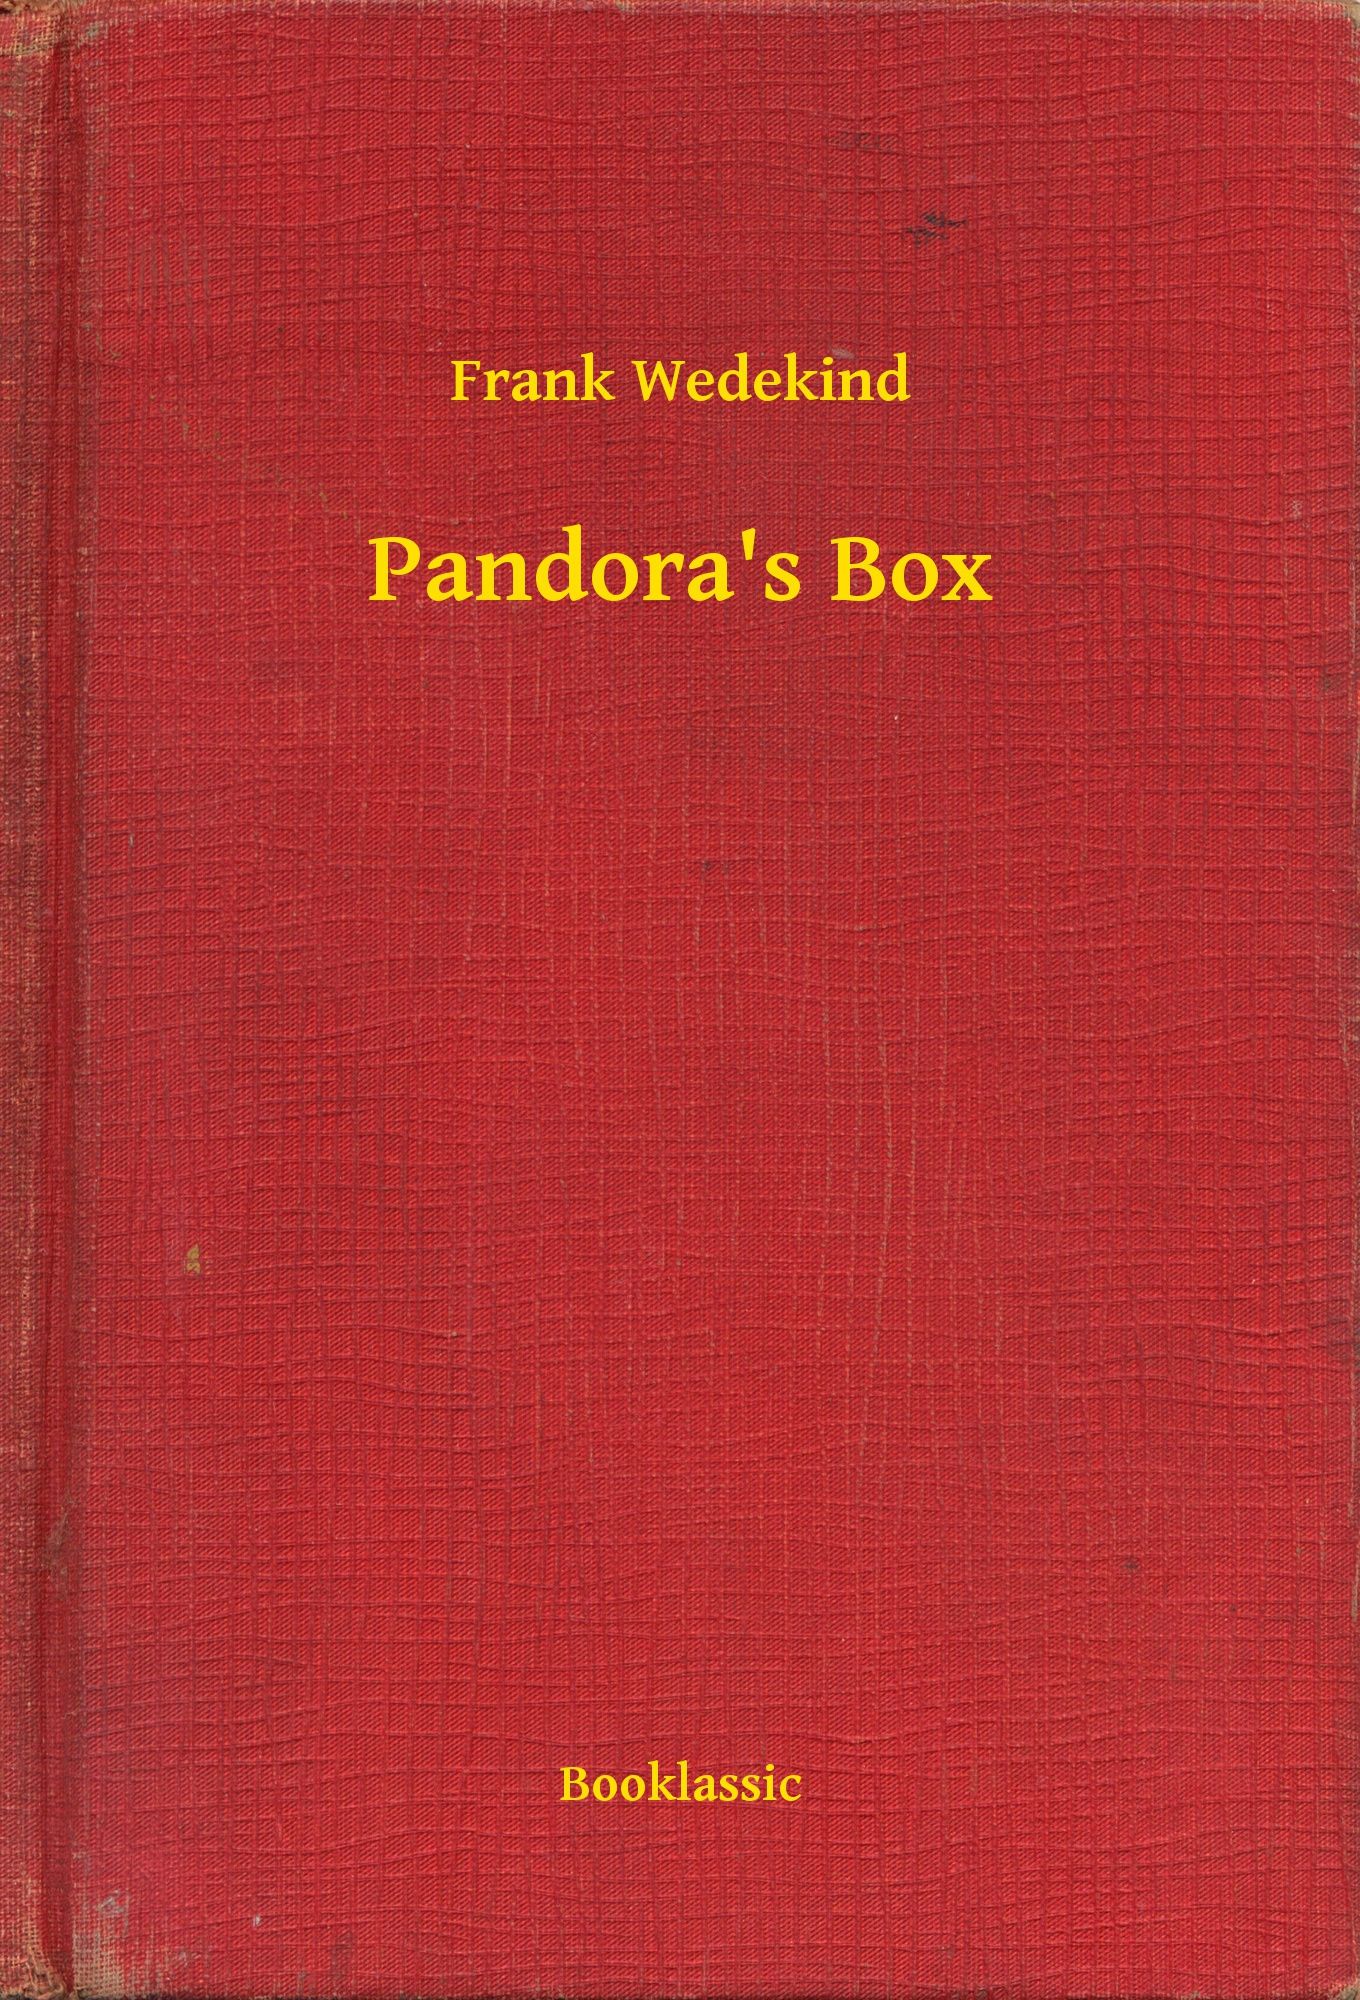 Pandora"s Box